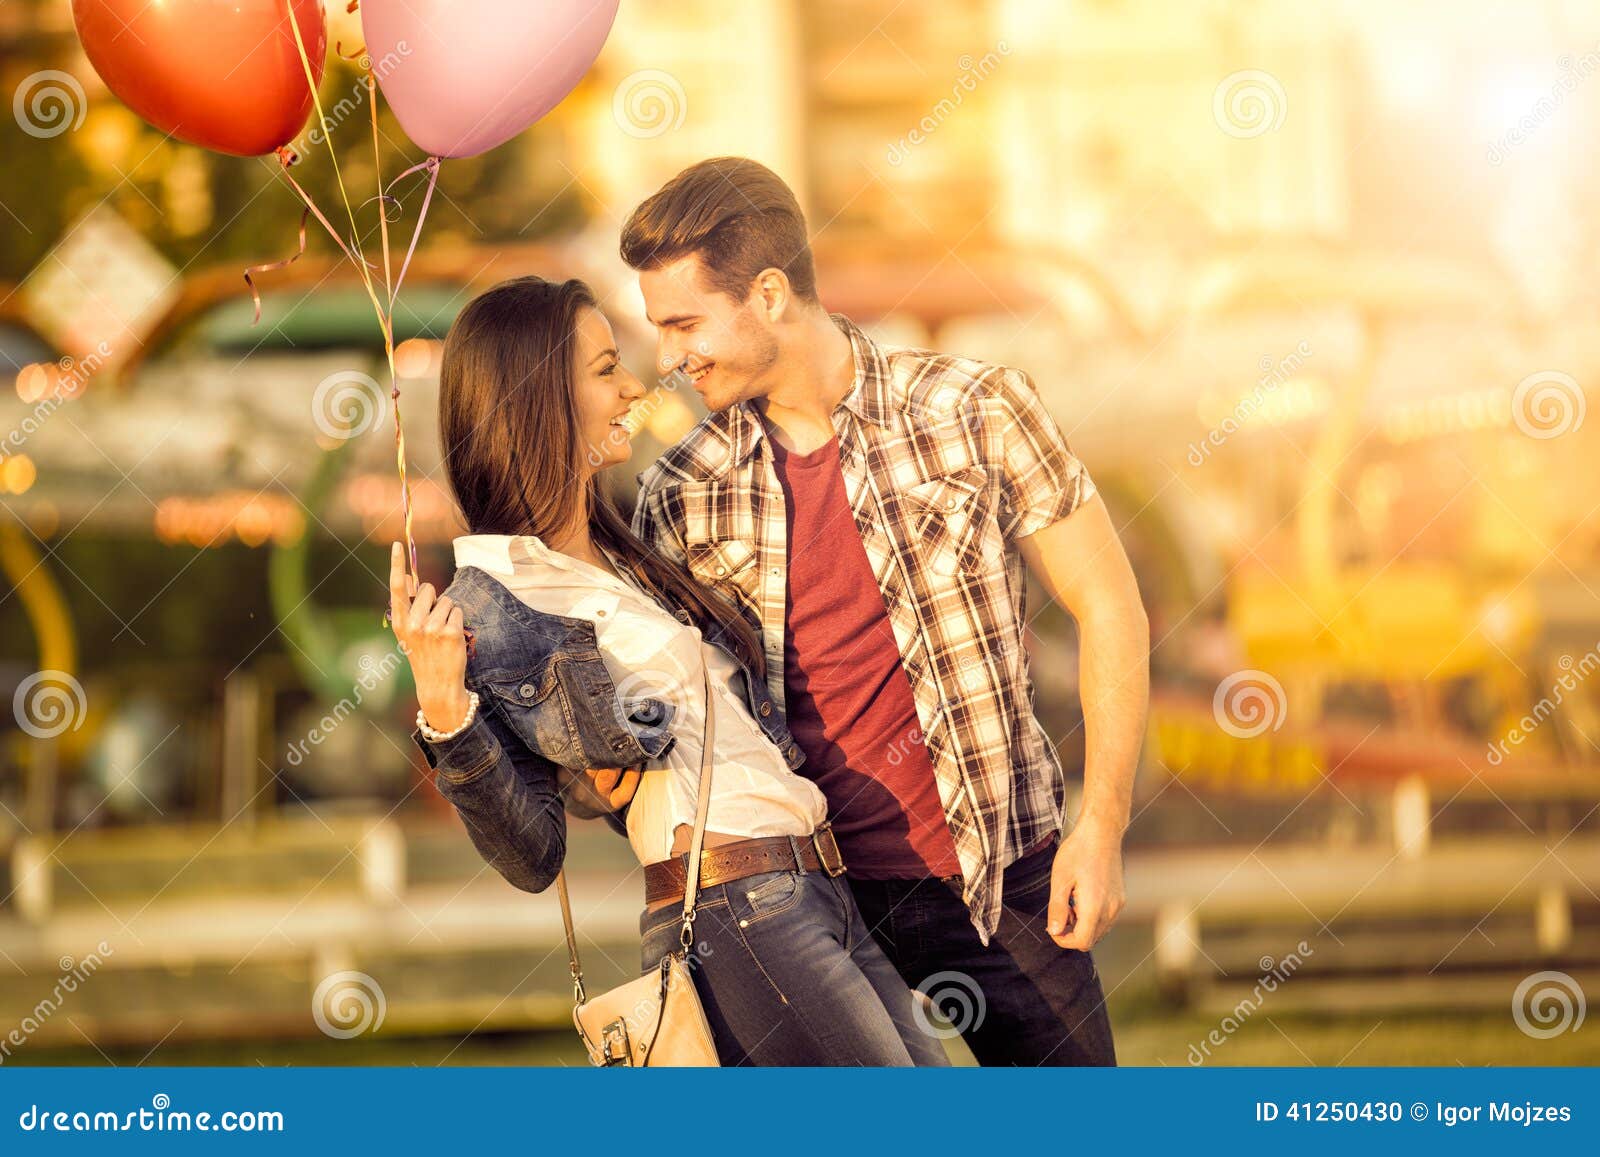 affectionate couple having fun in amusement park